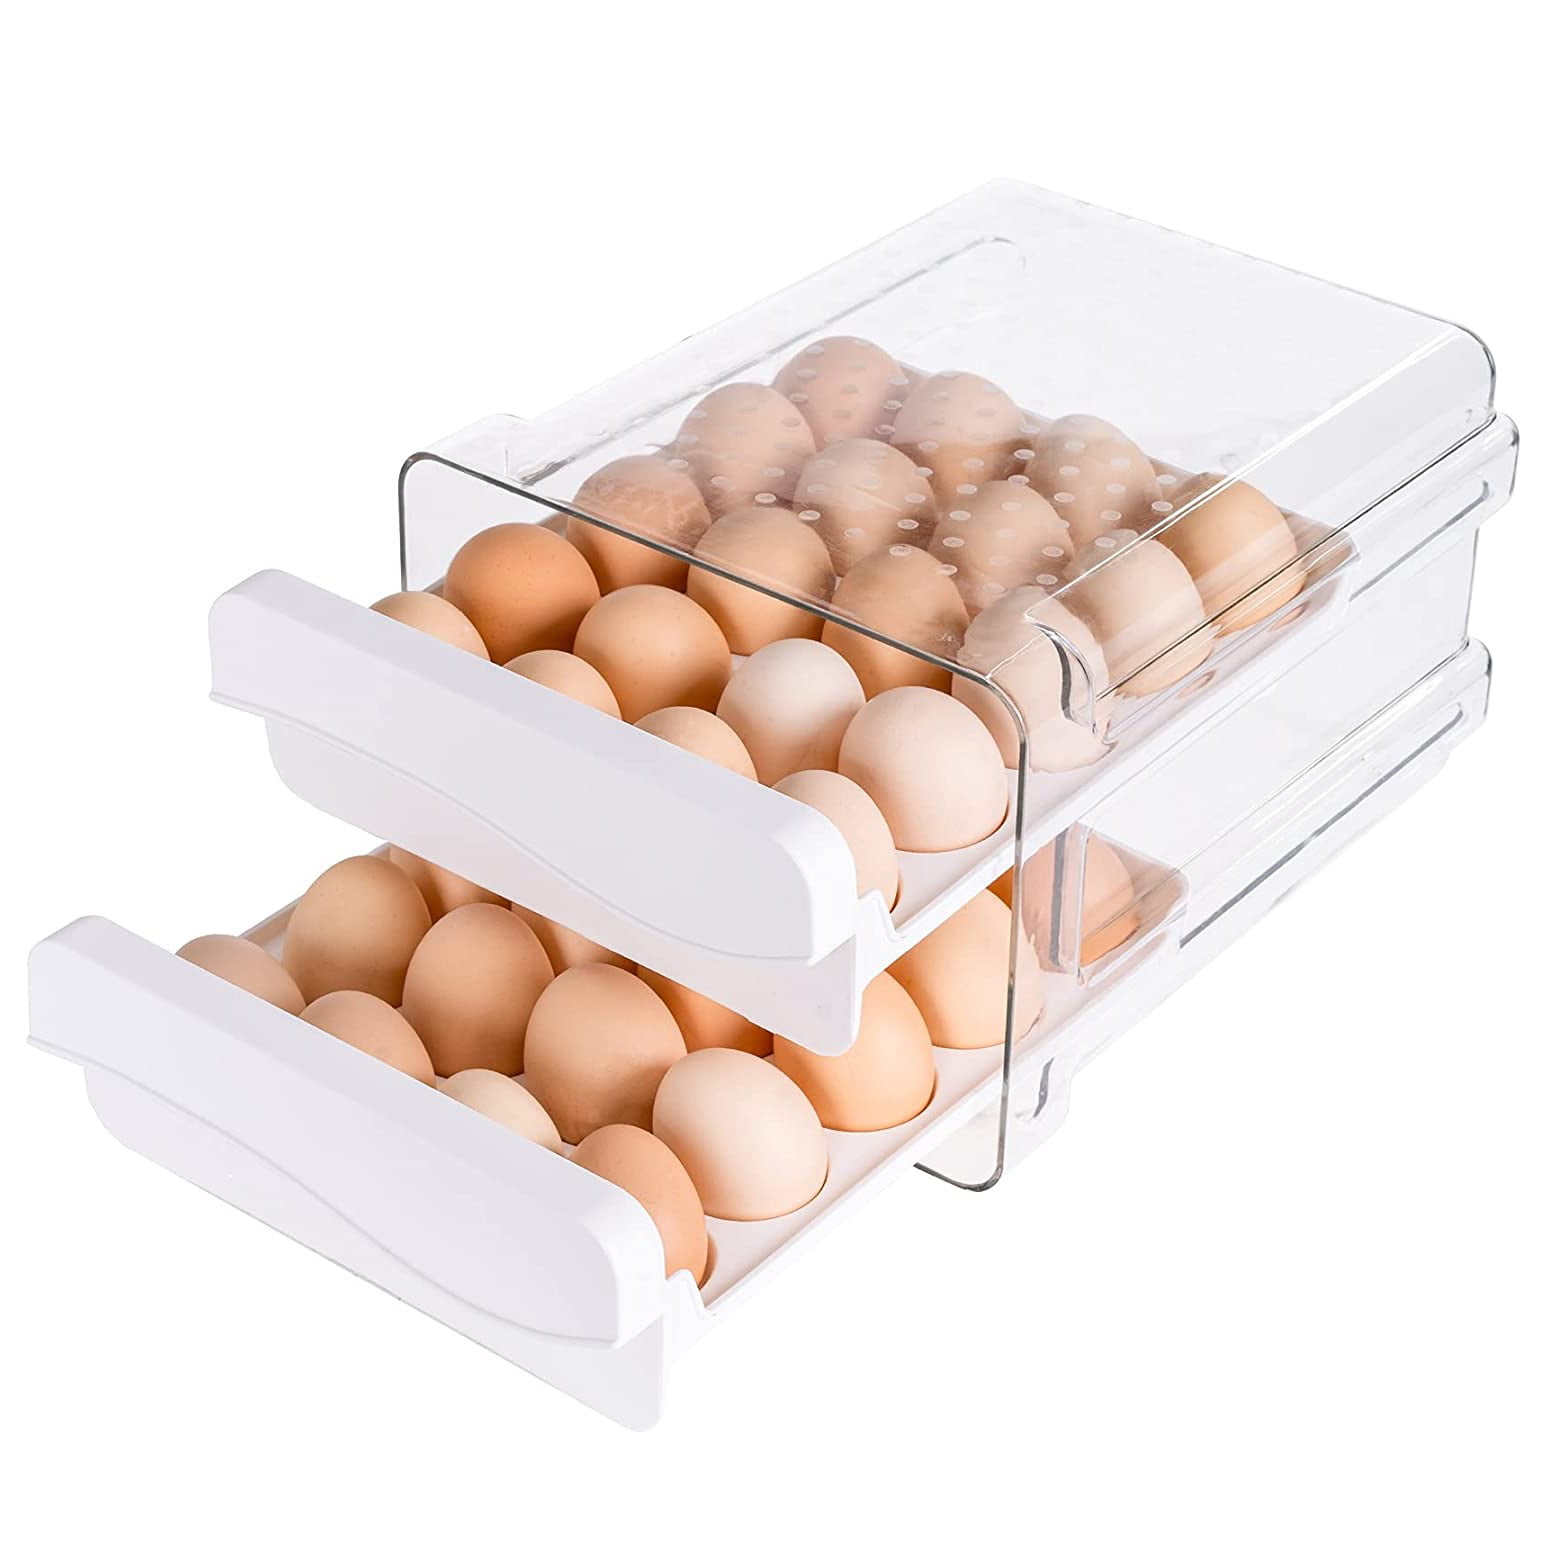 Fridge Organizer with Handles Multi Layer Stackable Plastic Egg Holder Contains Refrigerator Storage Container White WAYTRIM Kitchen Plastic Egg Holder 2-tier 60 Egg Tray 